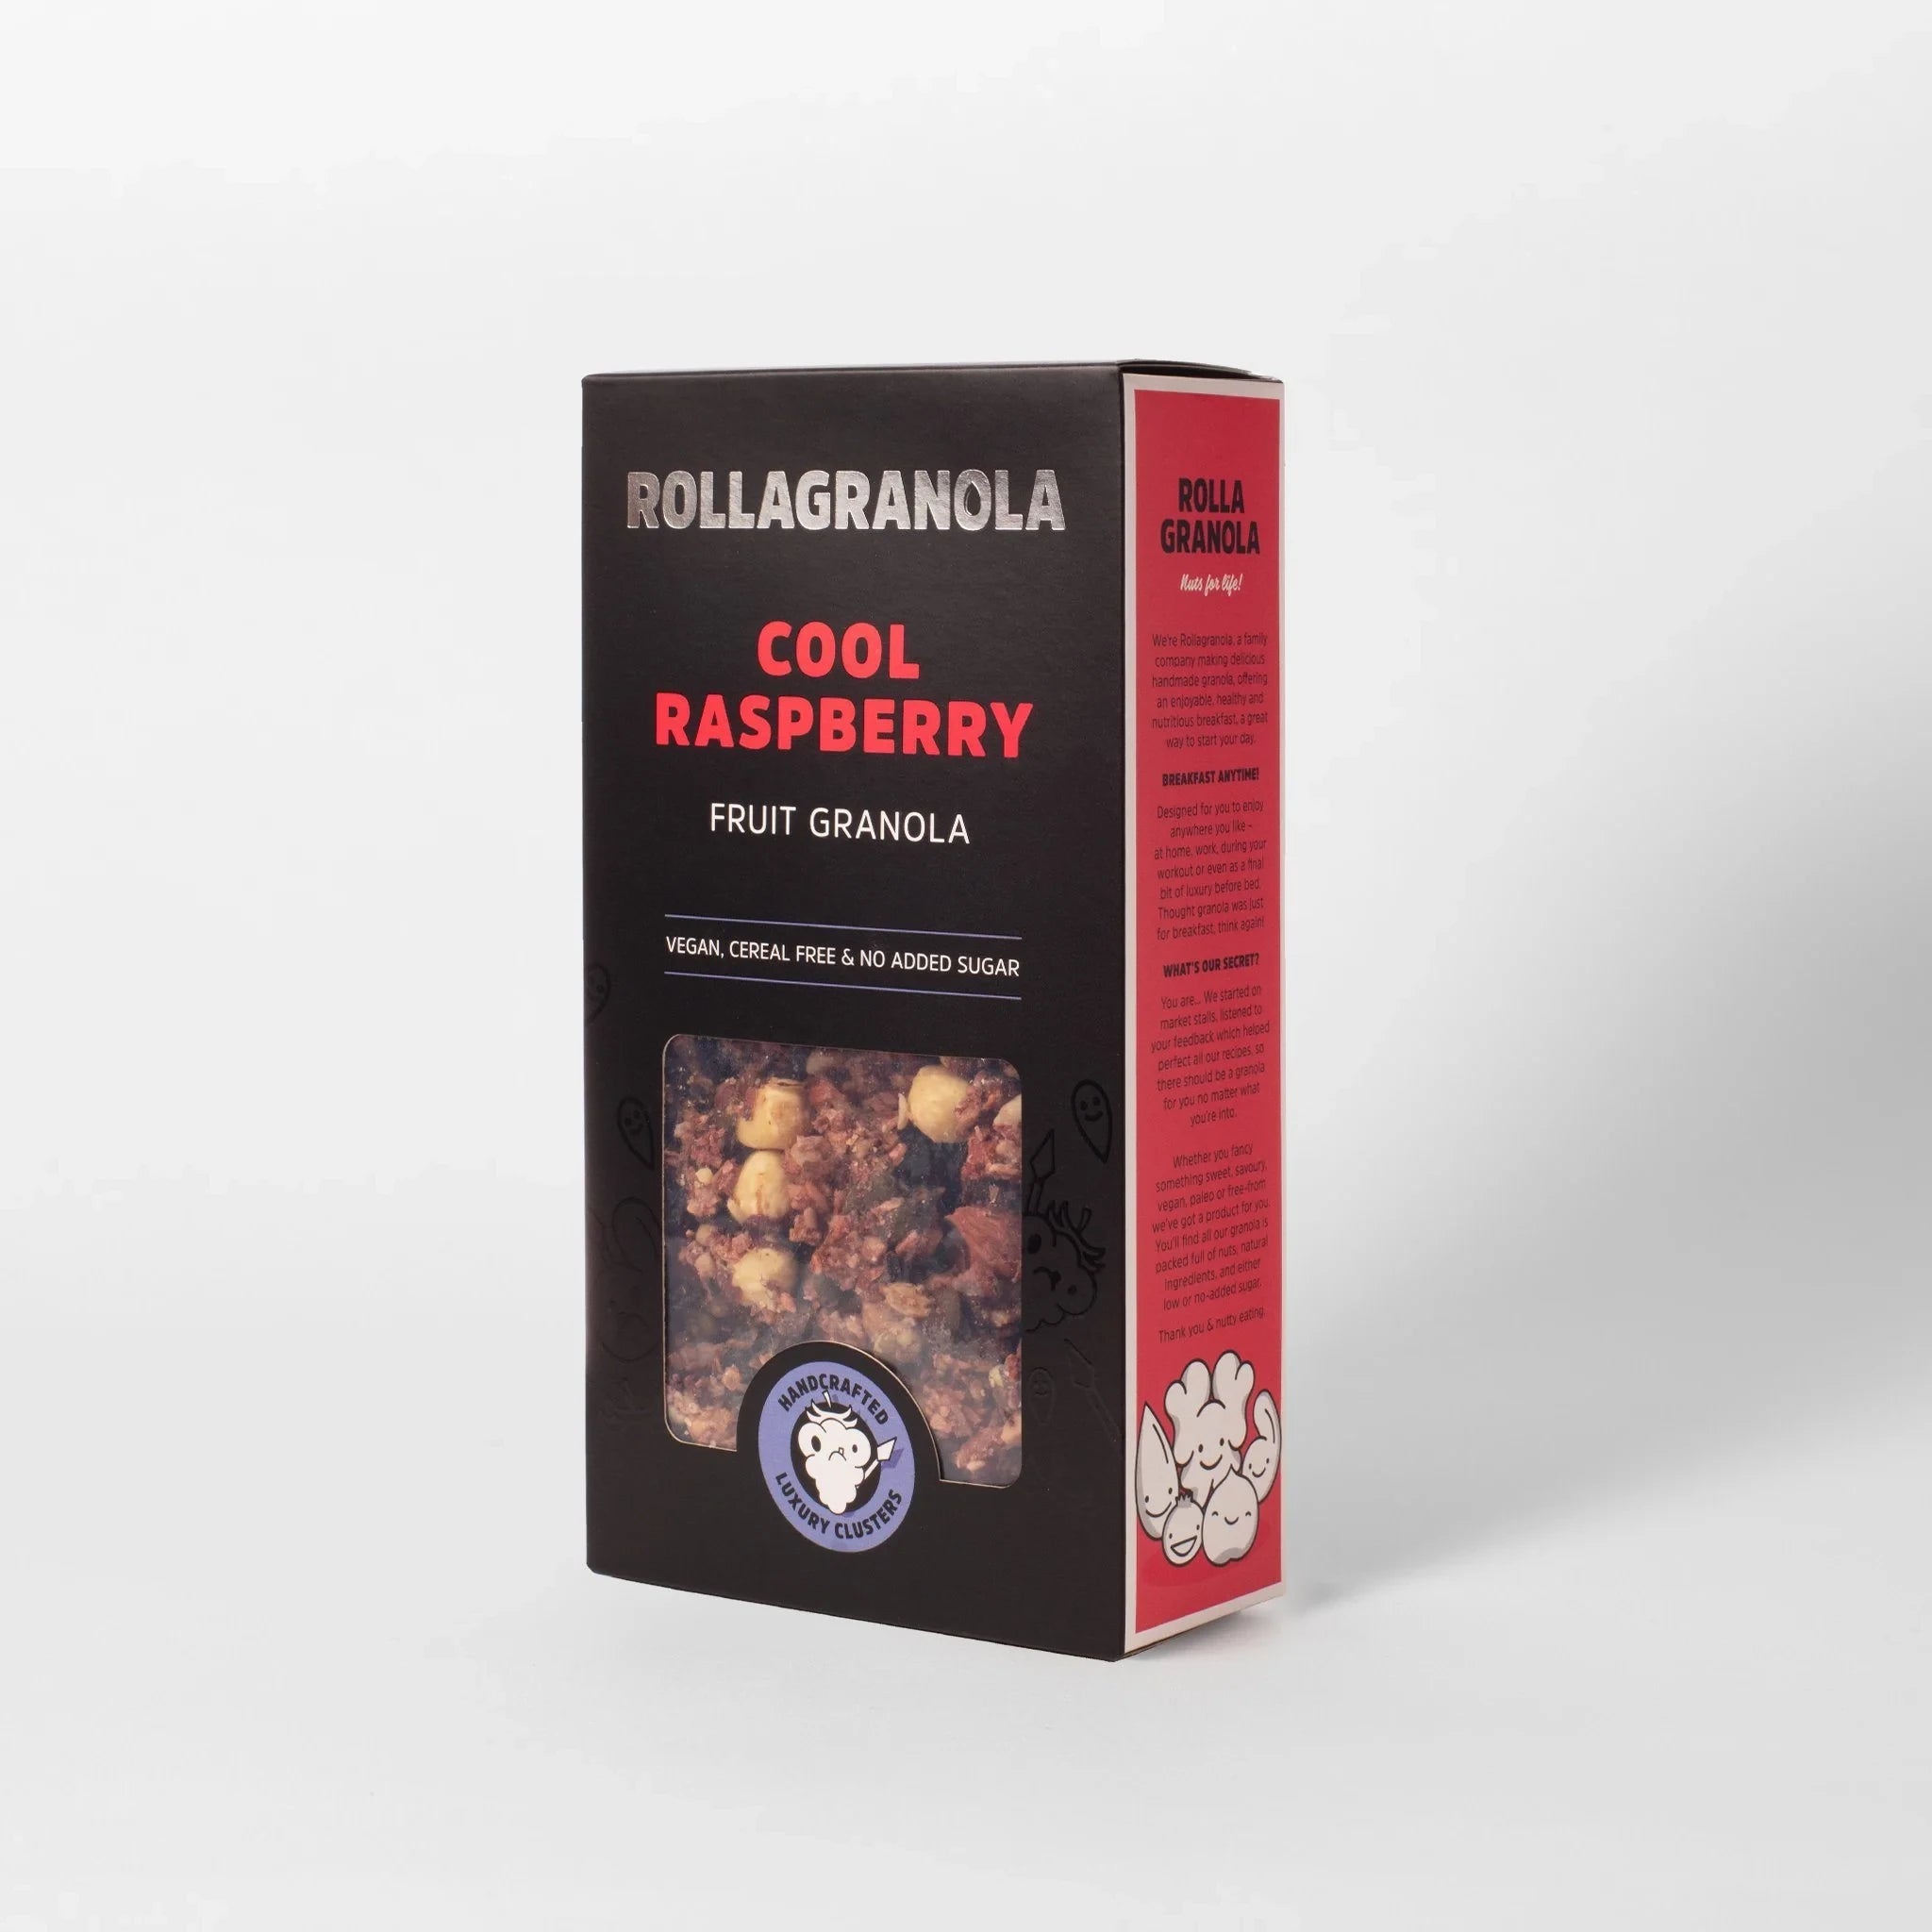 Cool Raspberry Grain-free Granola